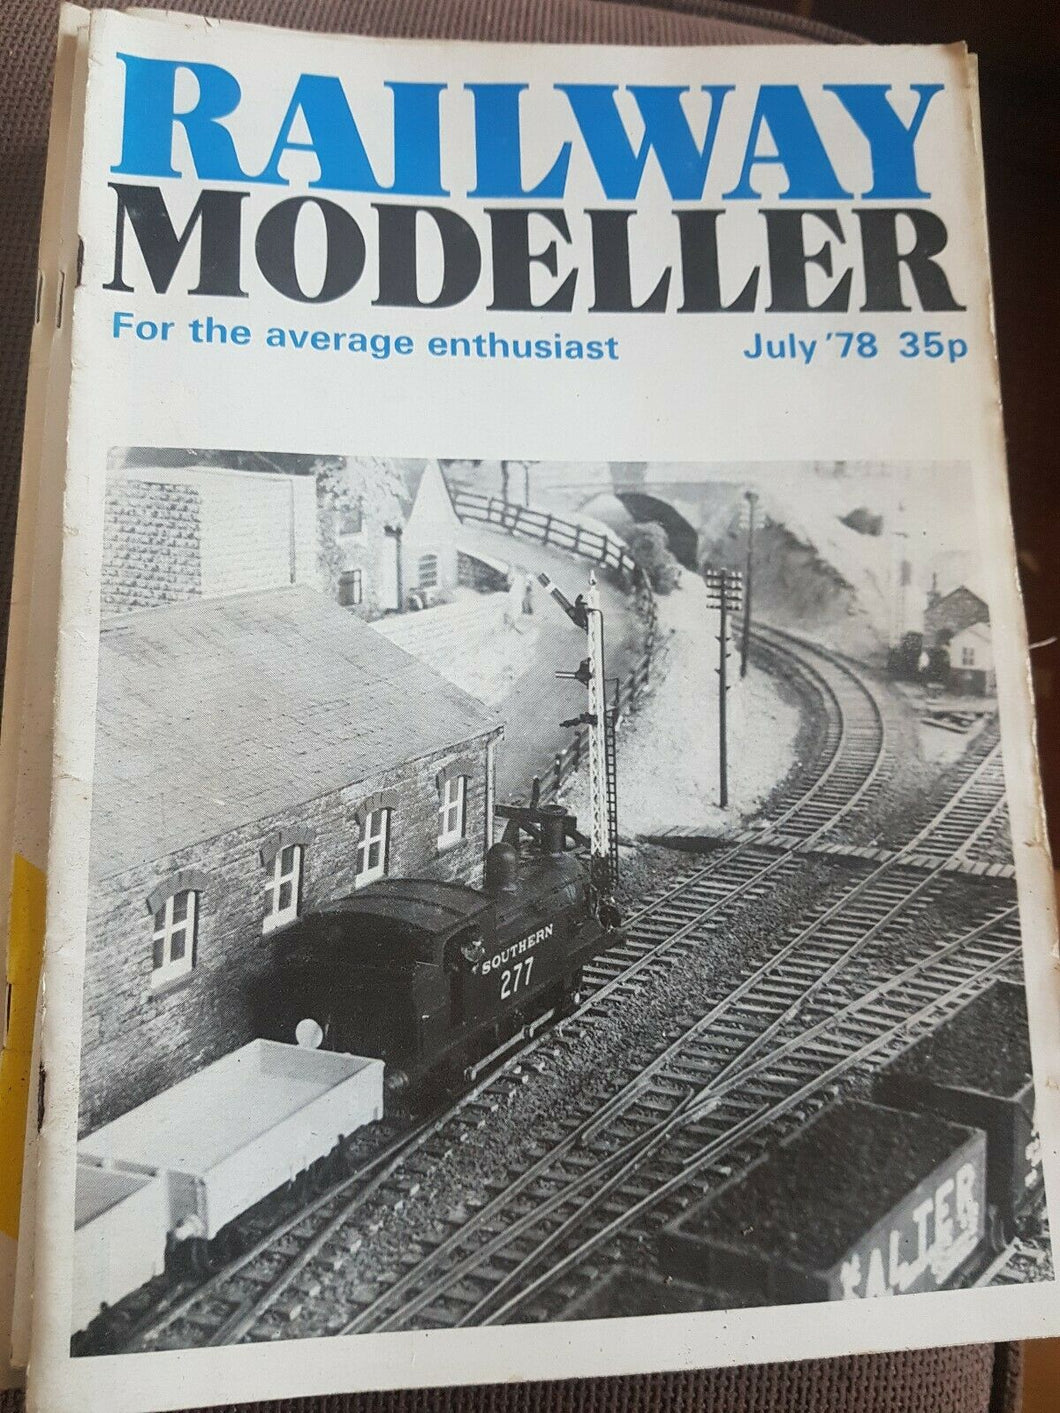 Railway modeller magazine July 1978